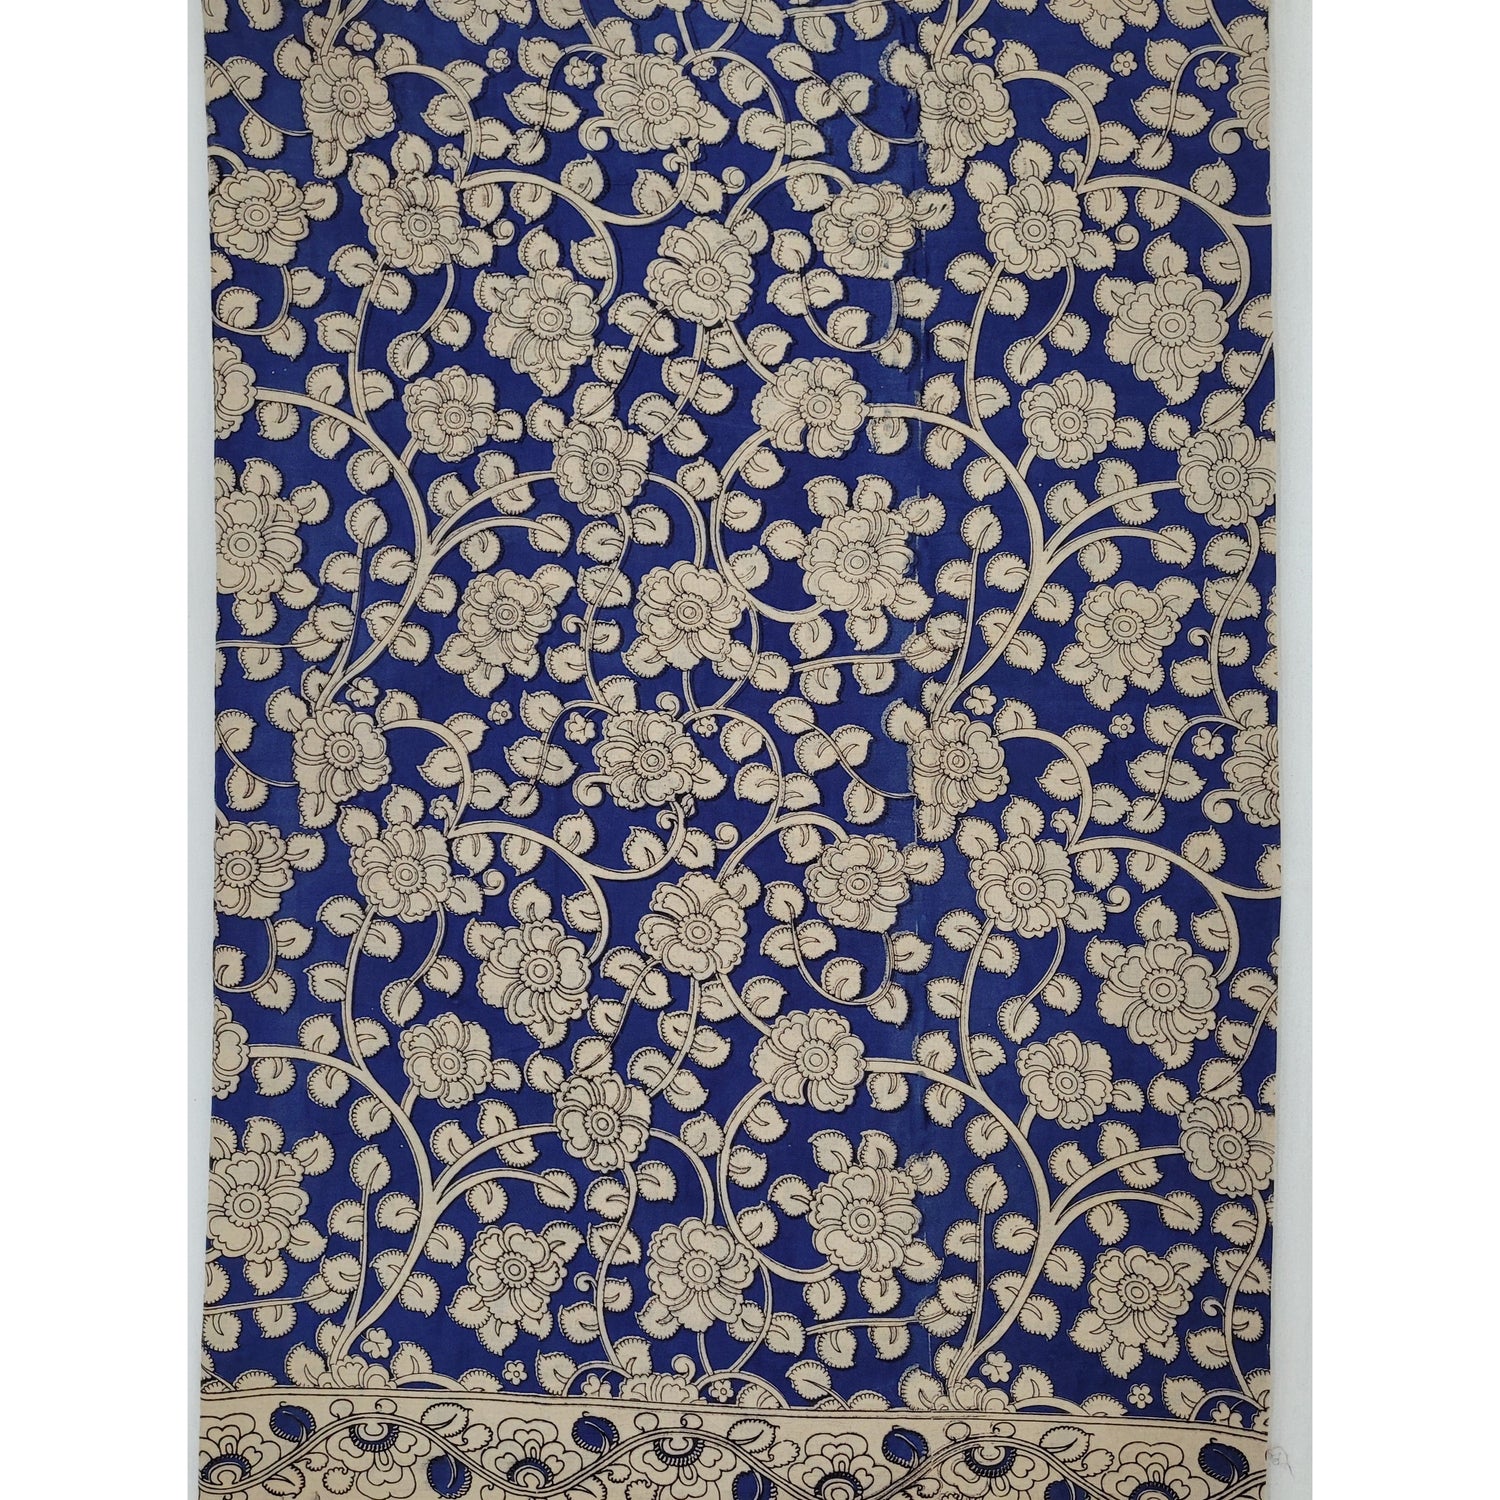 Handprinted Kalamkari Cotton saree - Vinshika